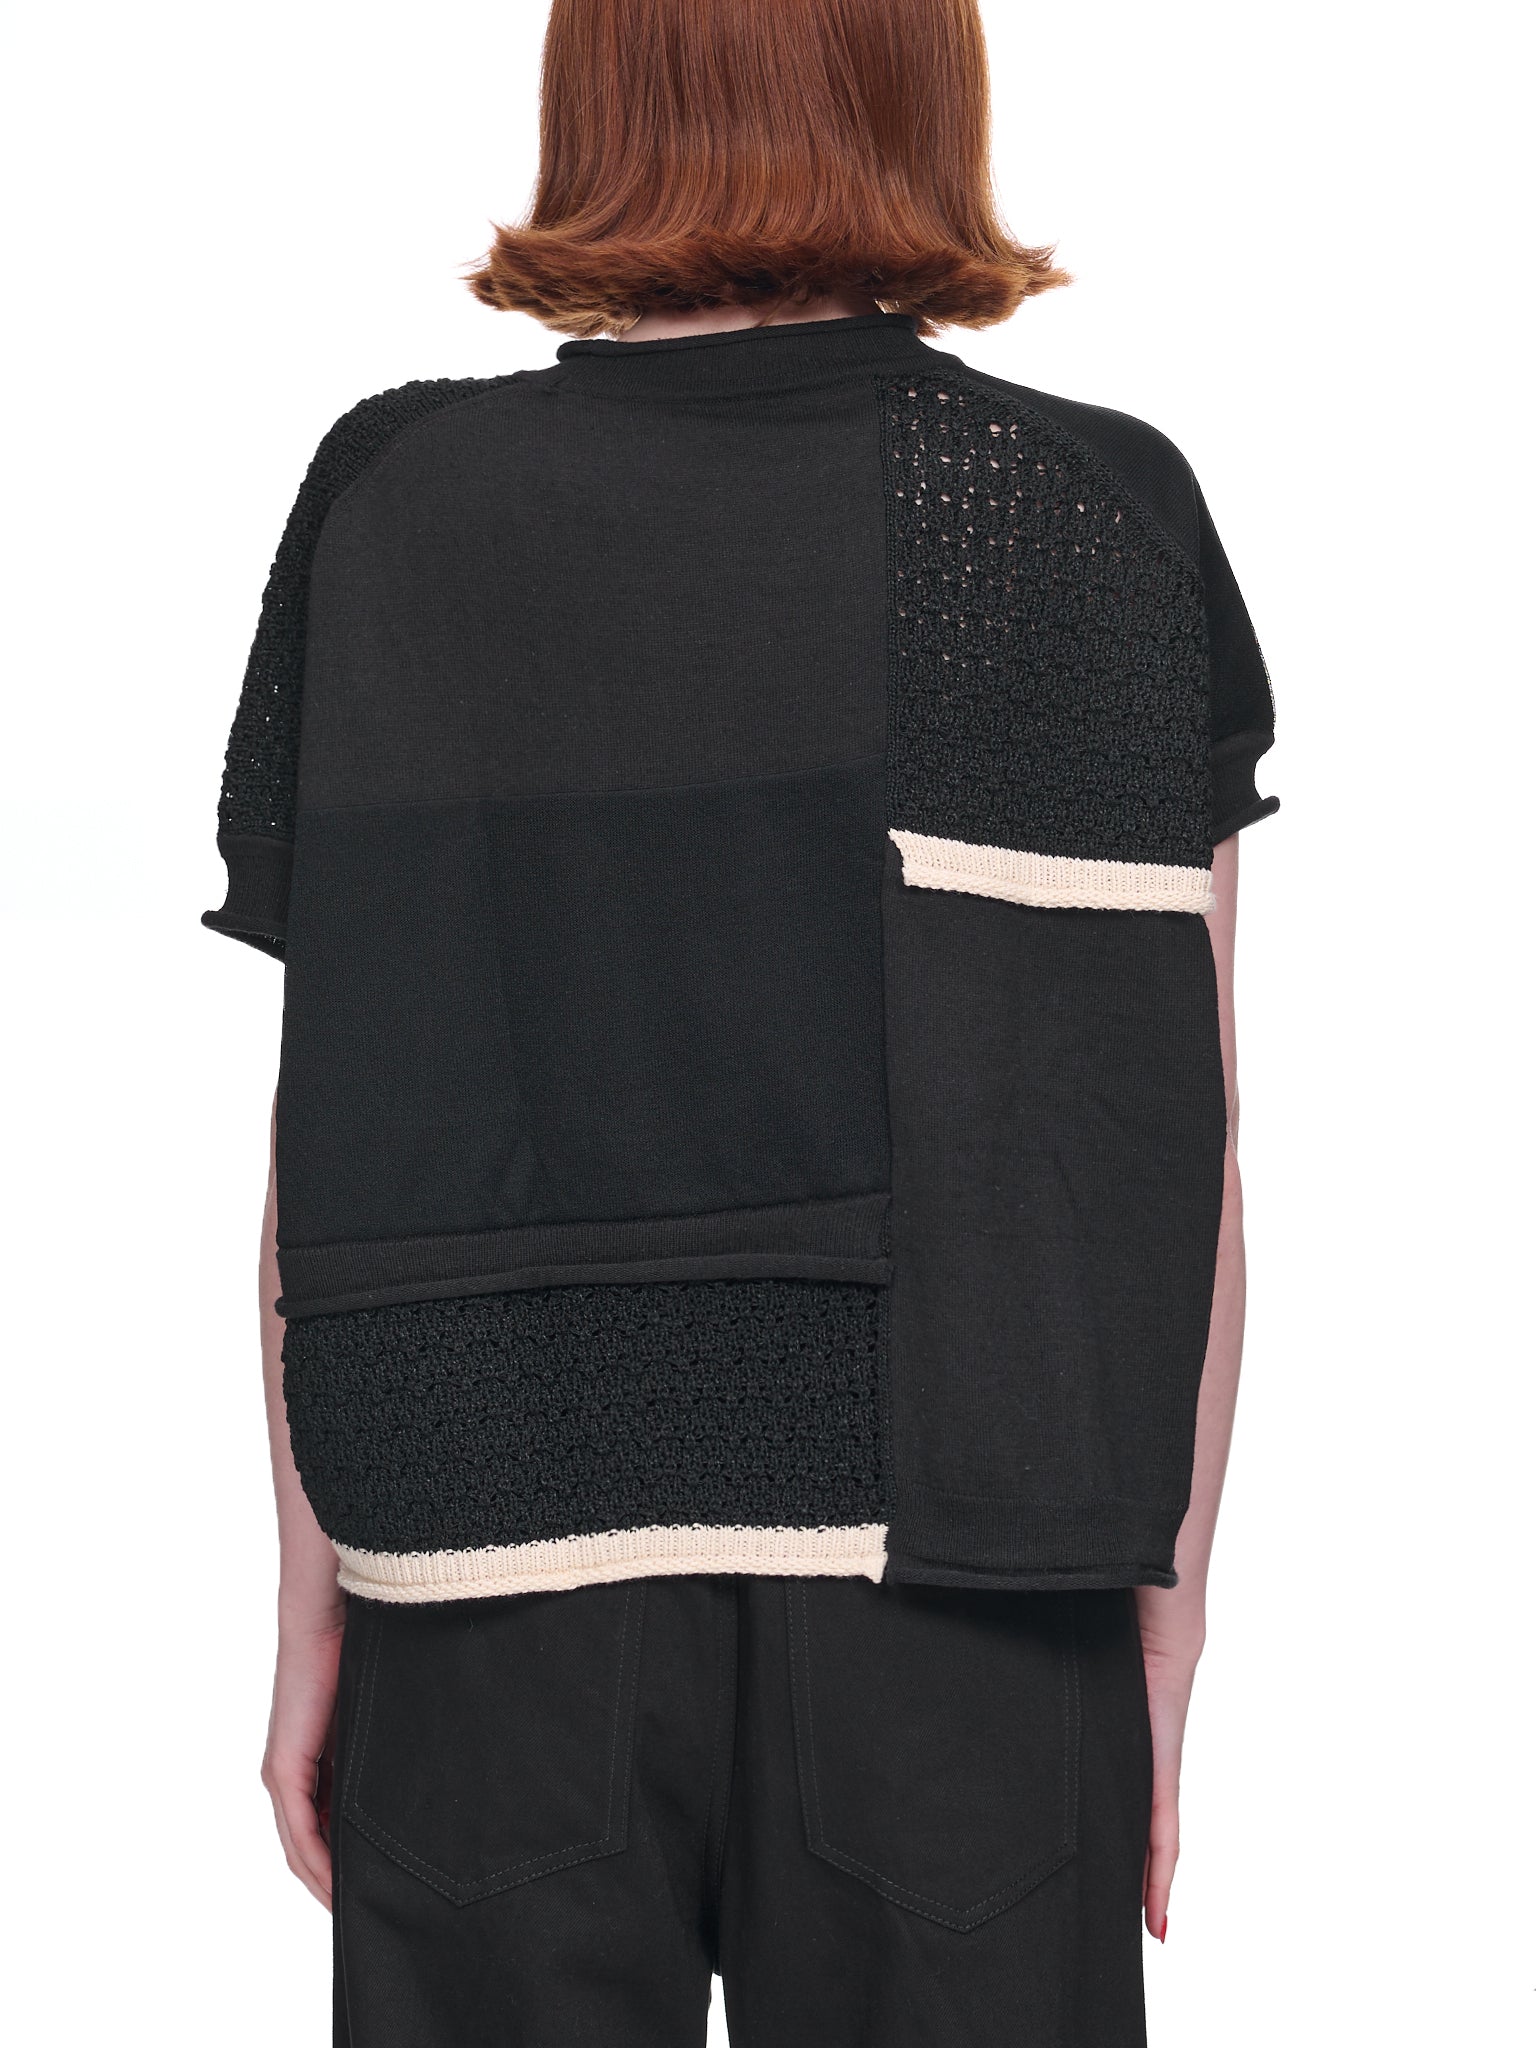 Paneled Crochet Top (YI-K74-051-BLACK)